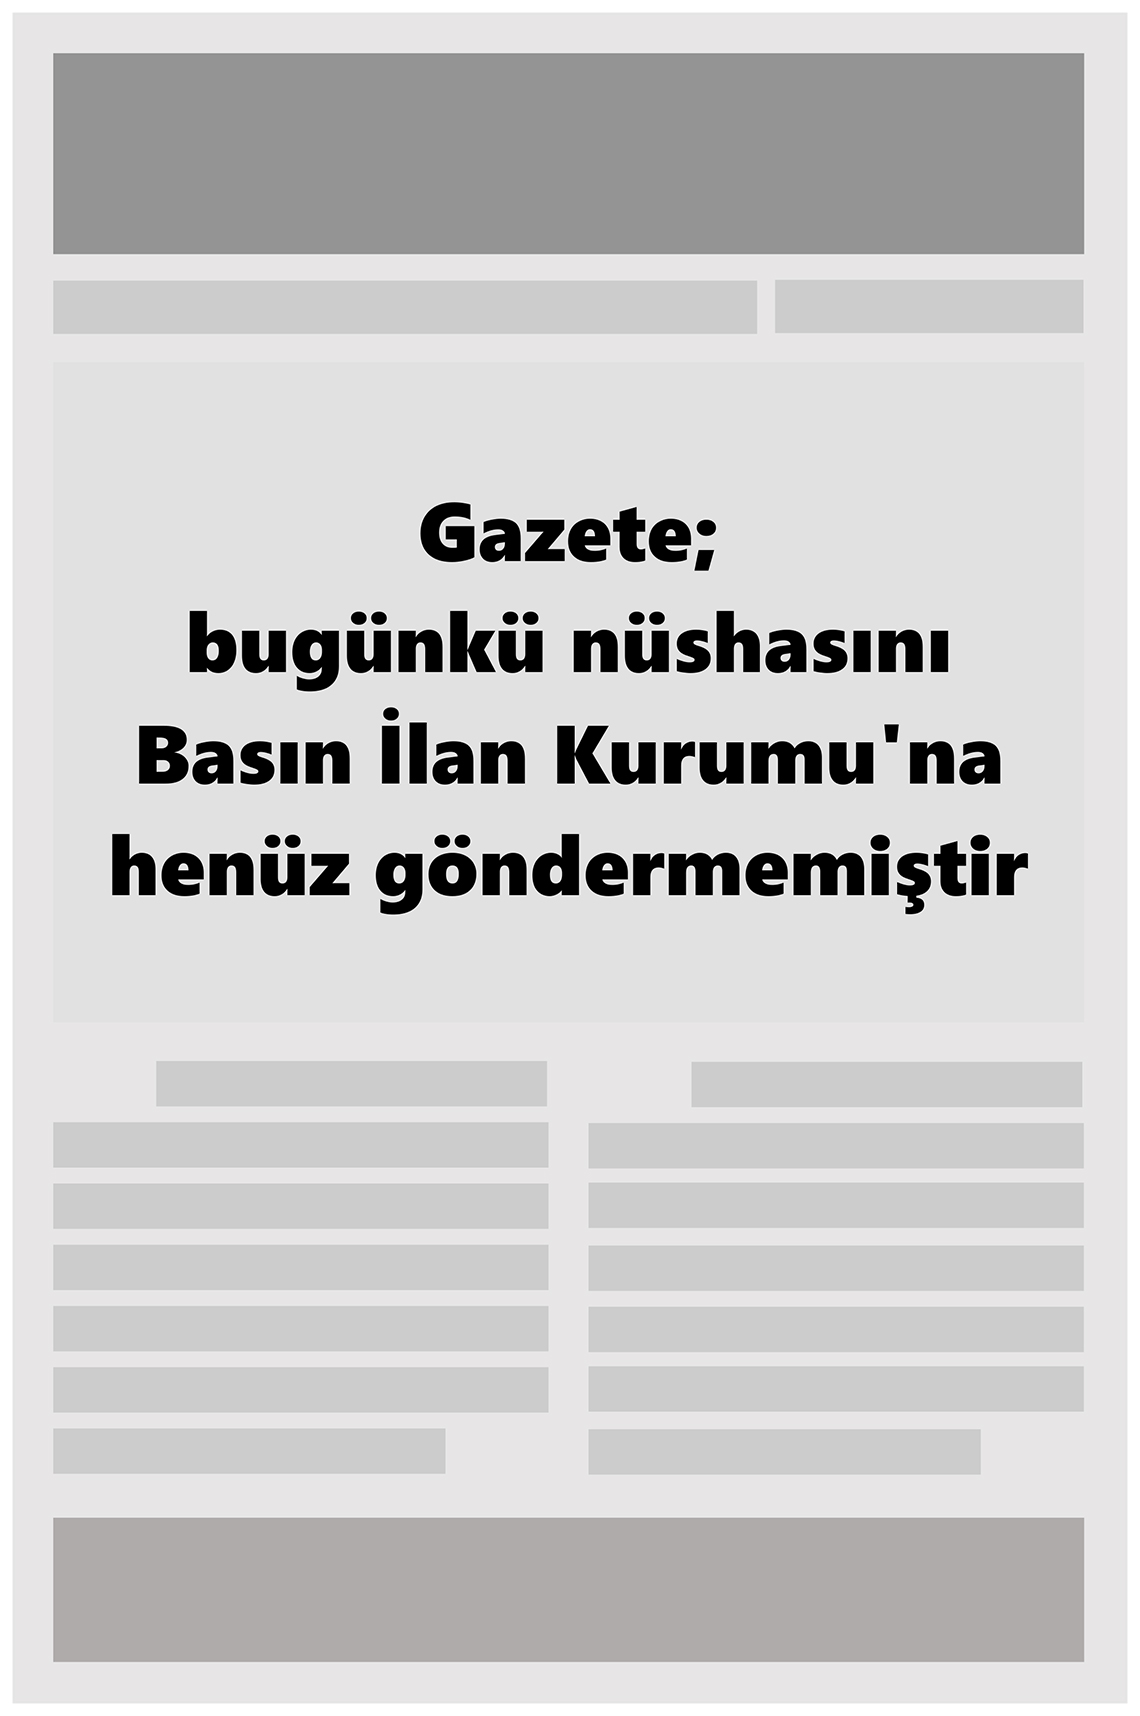 Özgür Haber Gazete Manşeti